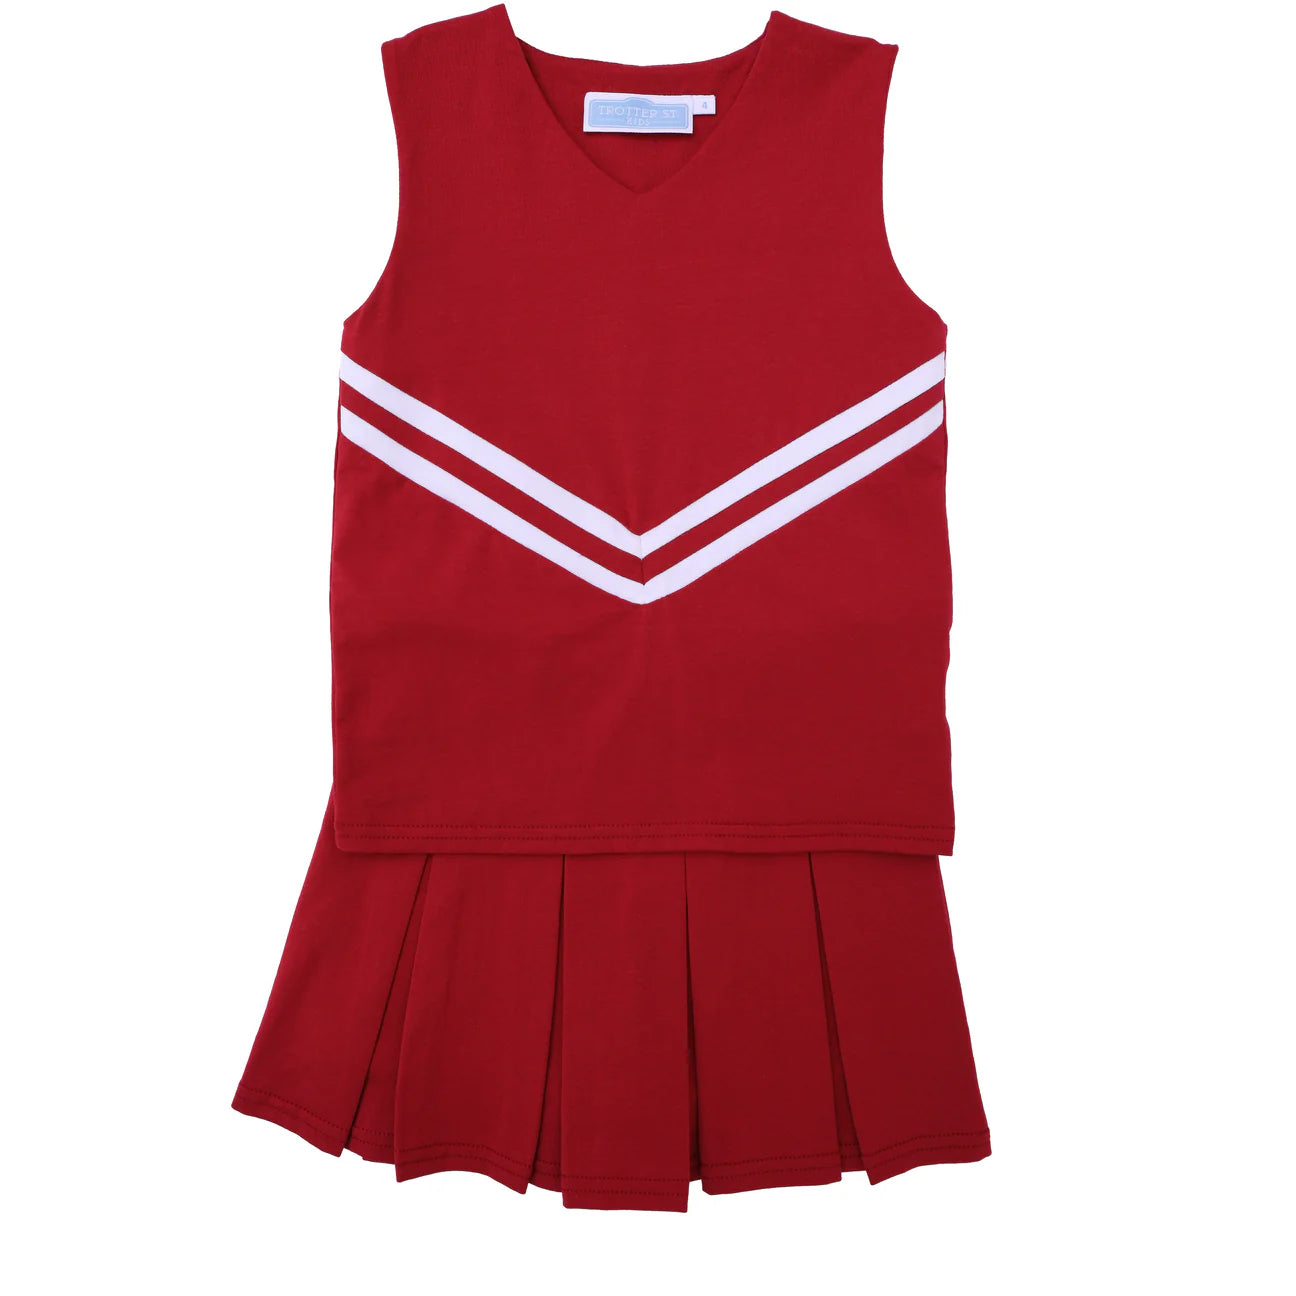 Red Cheer Uniform